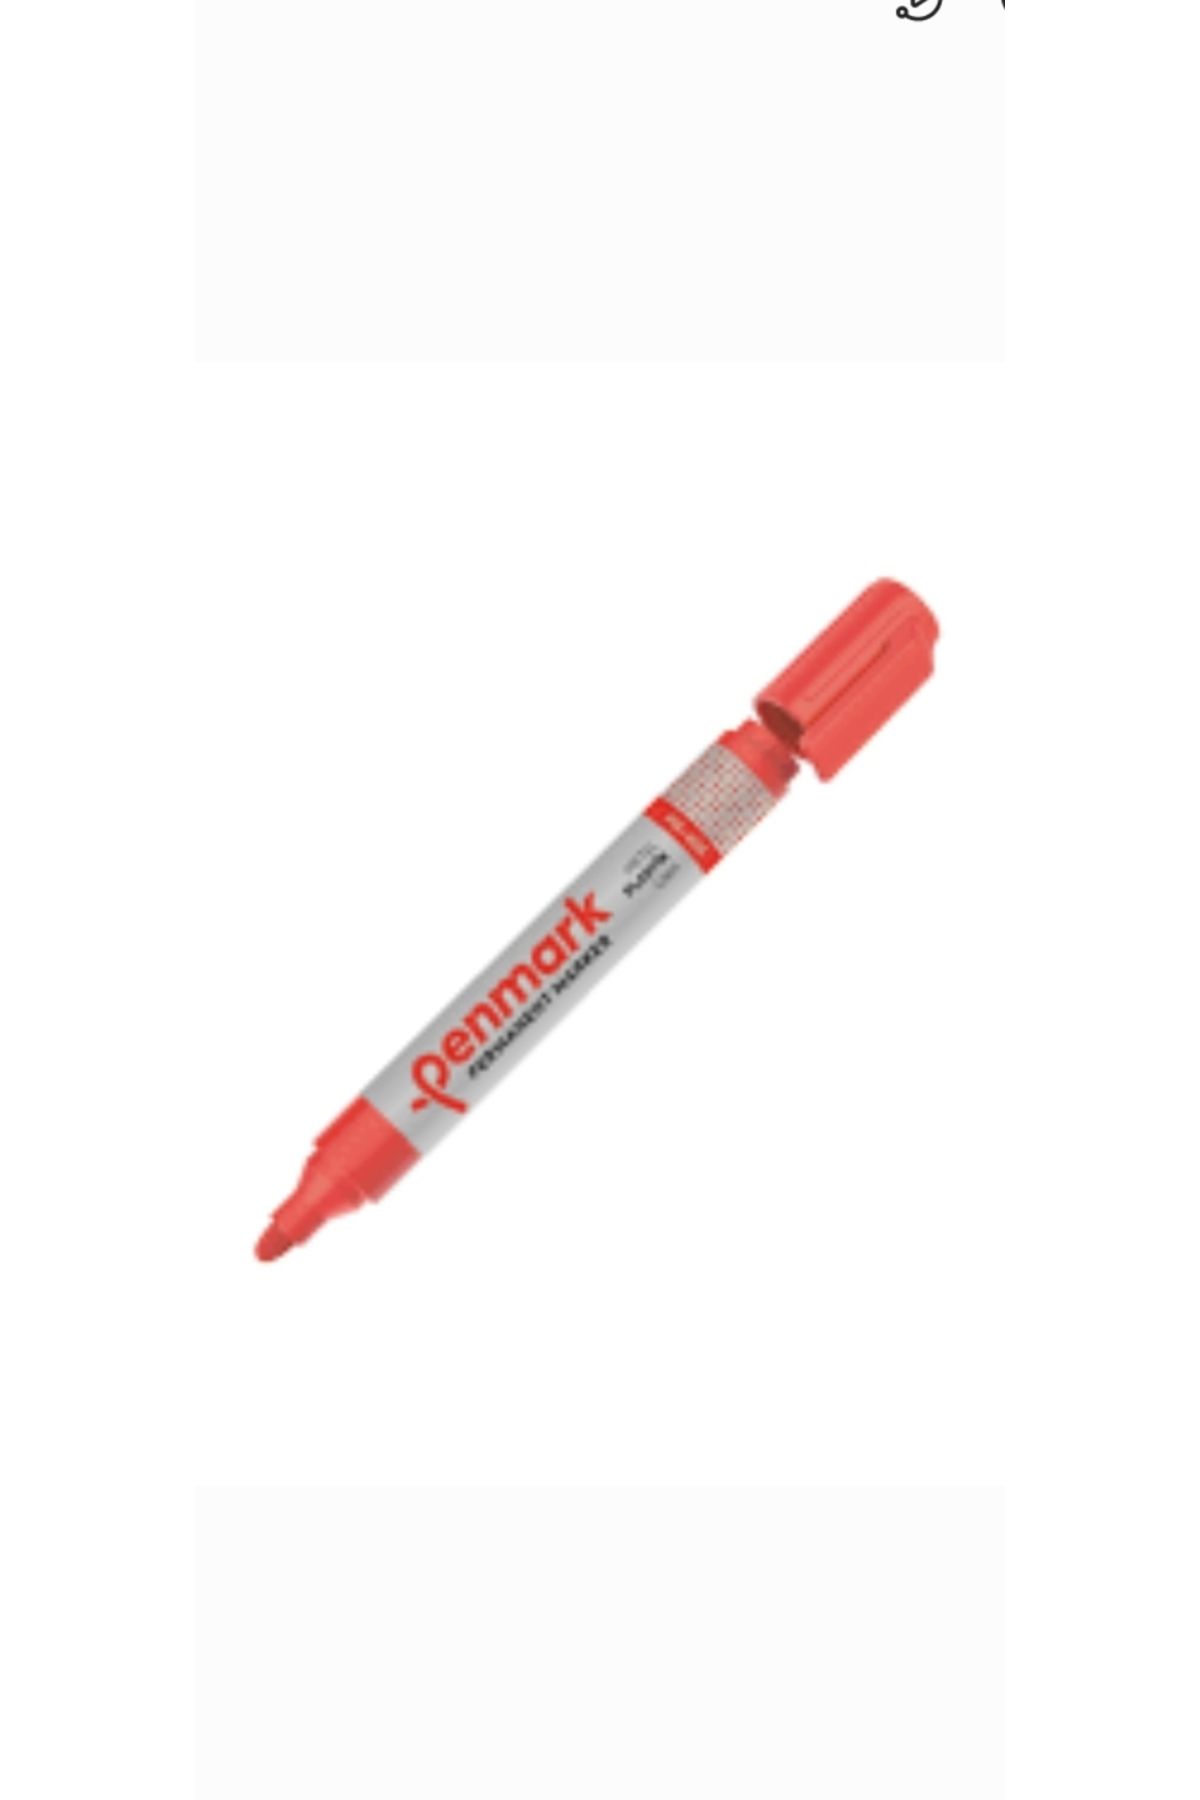 Mikro 24 adet permanent koli çuval kalemi kırmızı